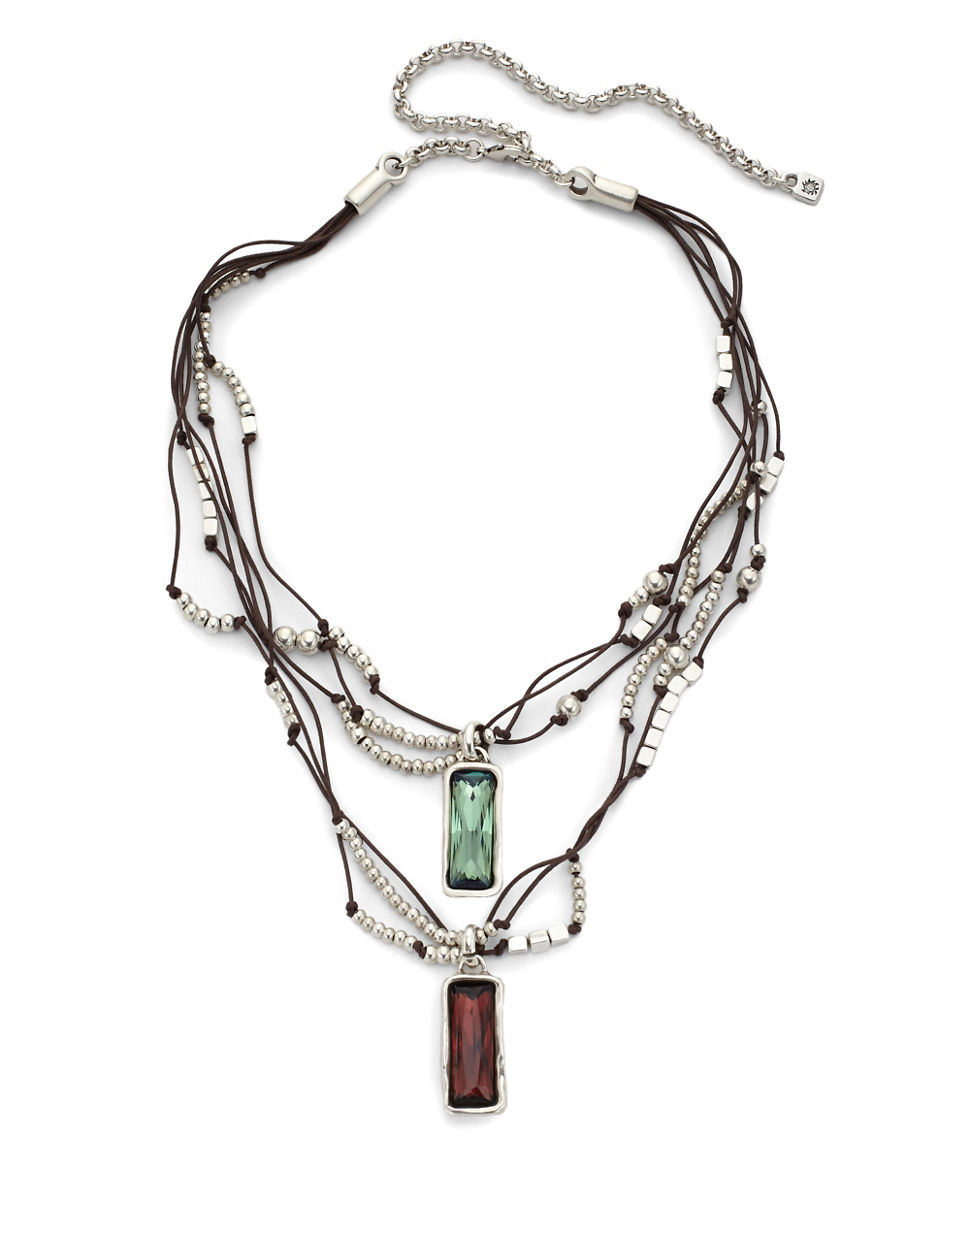 Lyst - Uno de 50 Layered Swarovski Crystal Pendant Necklace in Green